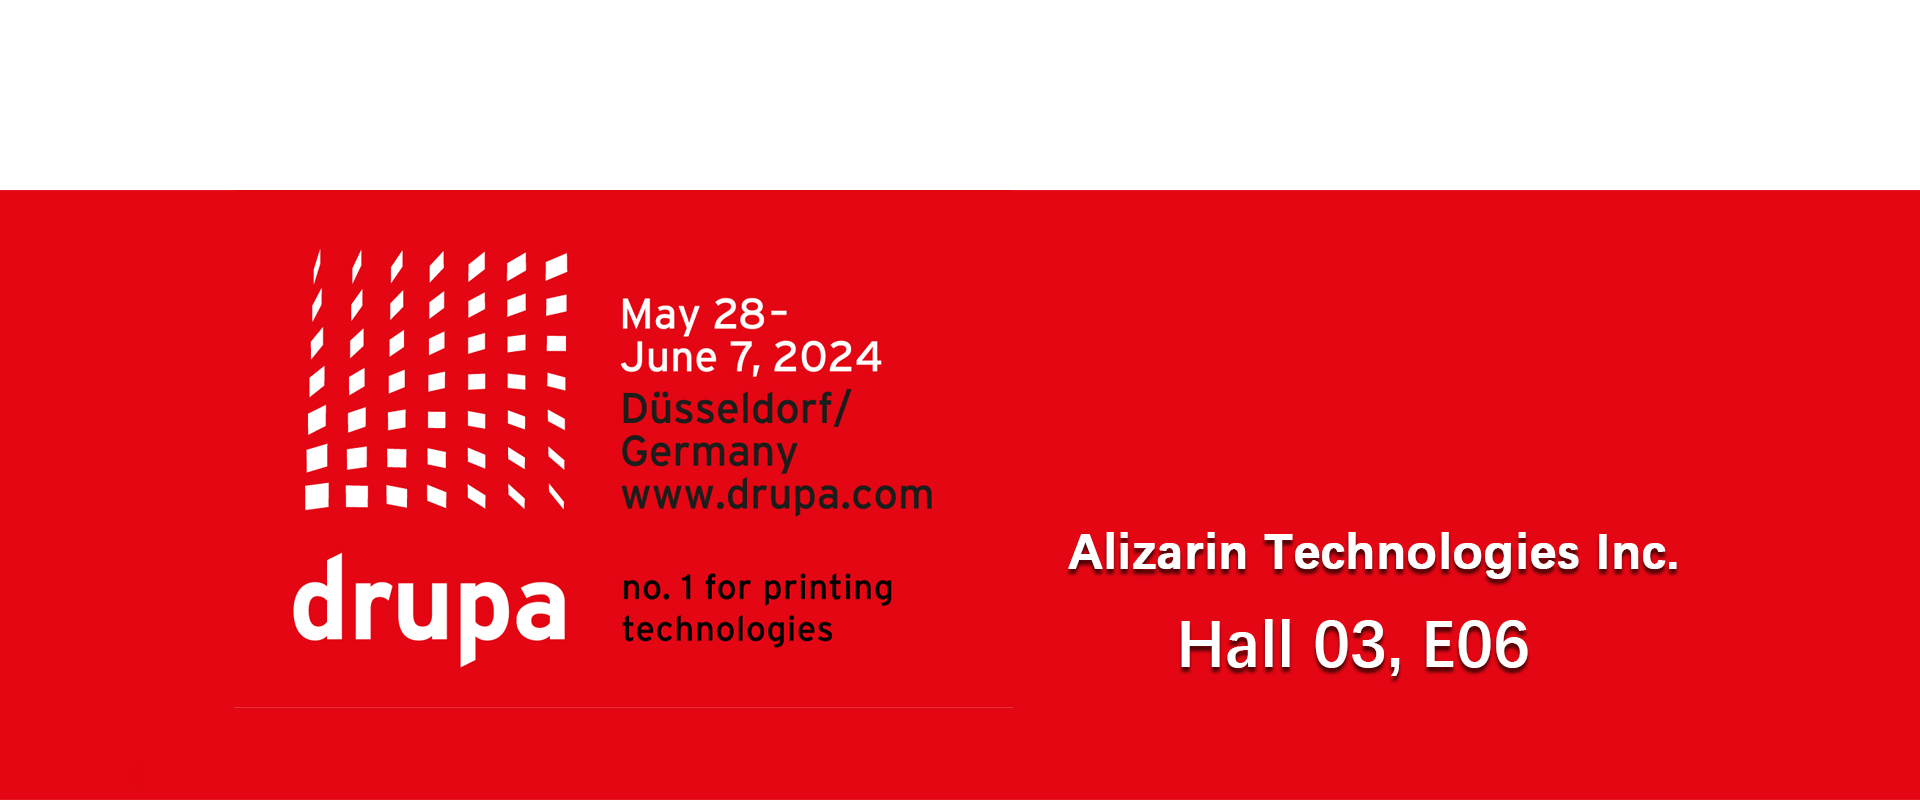 Drupa 2024 any Düsseldorf Germany, alizarin technologies Booth dia Hall 03, E06